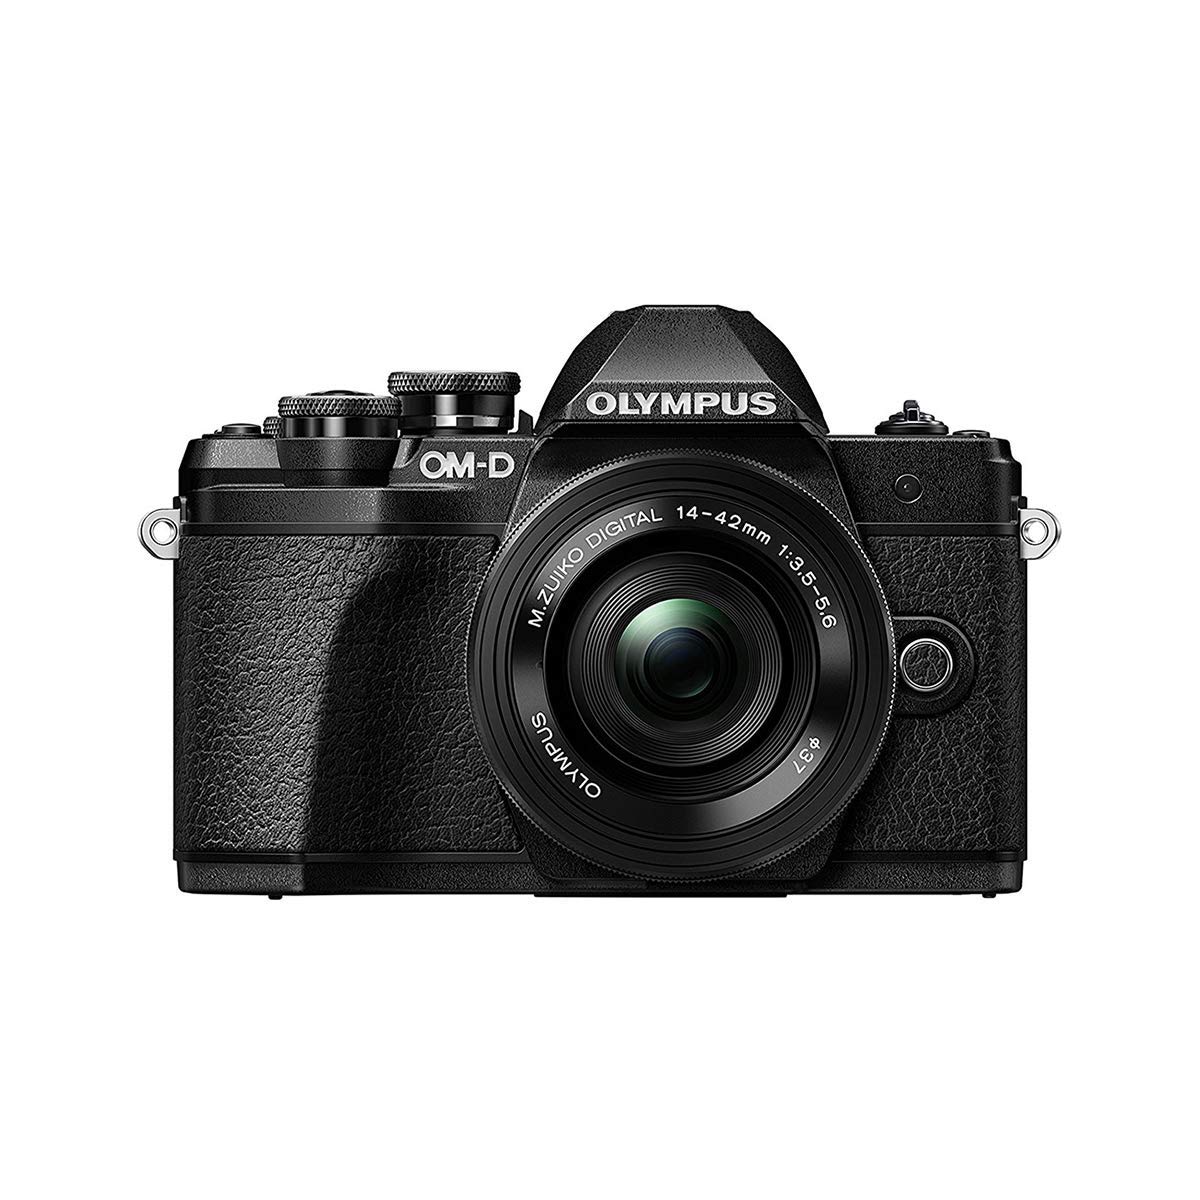 Olympus OM-D E-M10 Mark III camera Review – LI FILMS